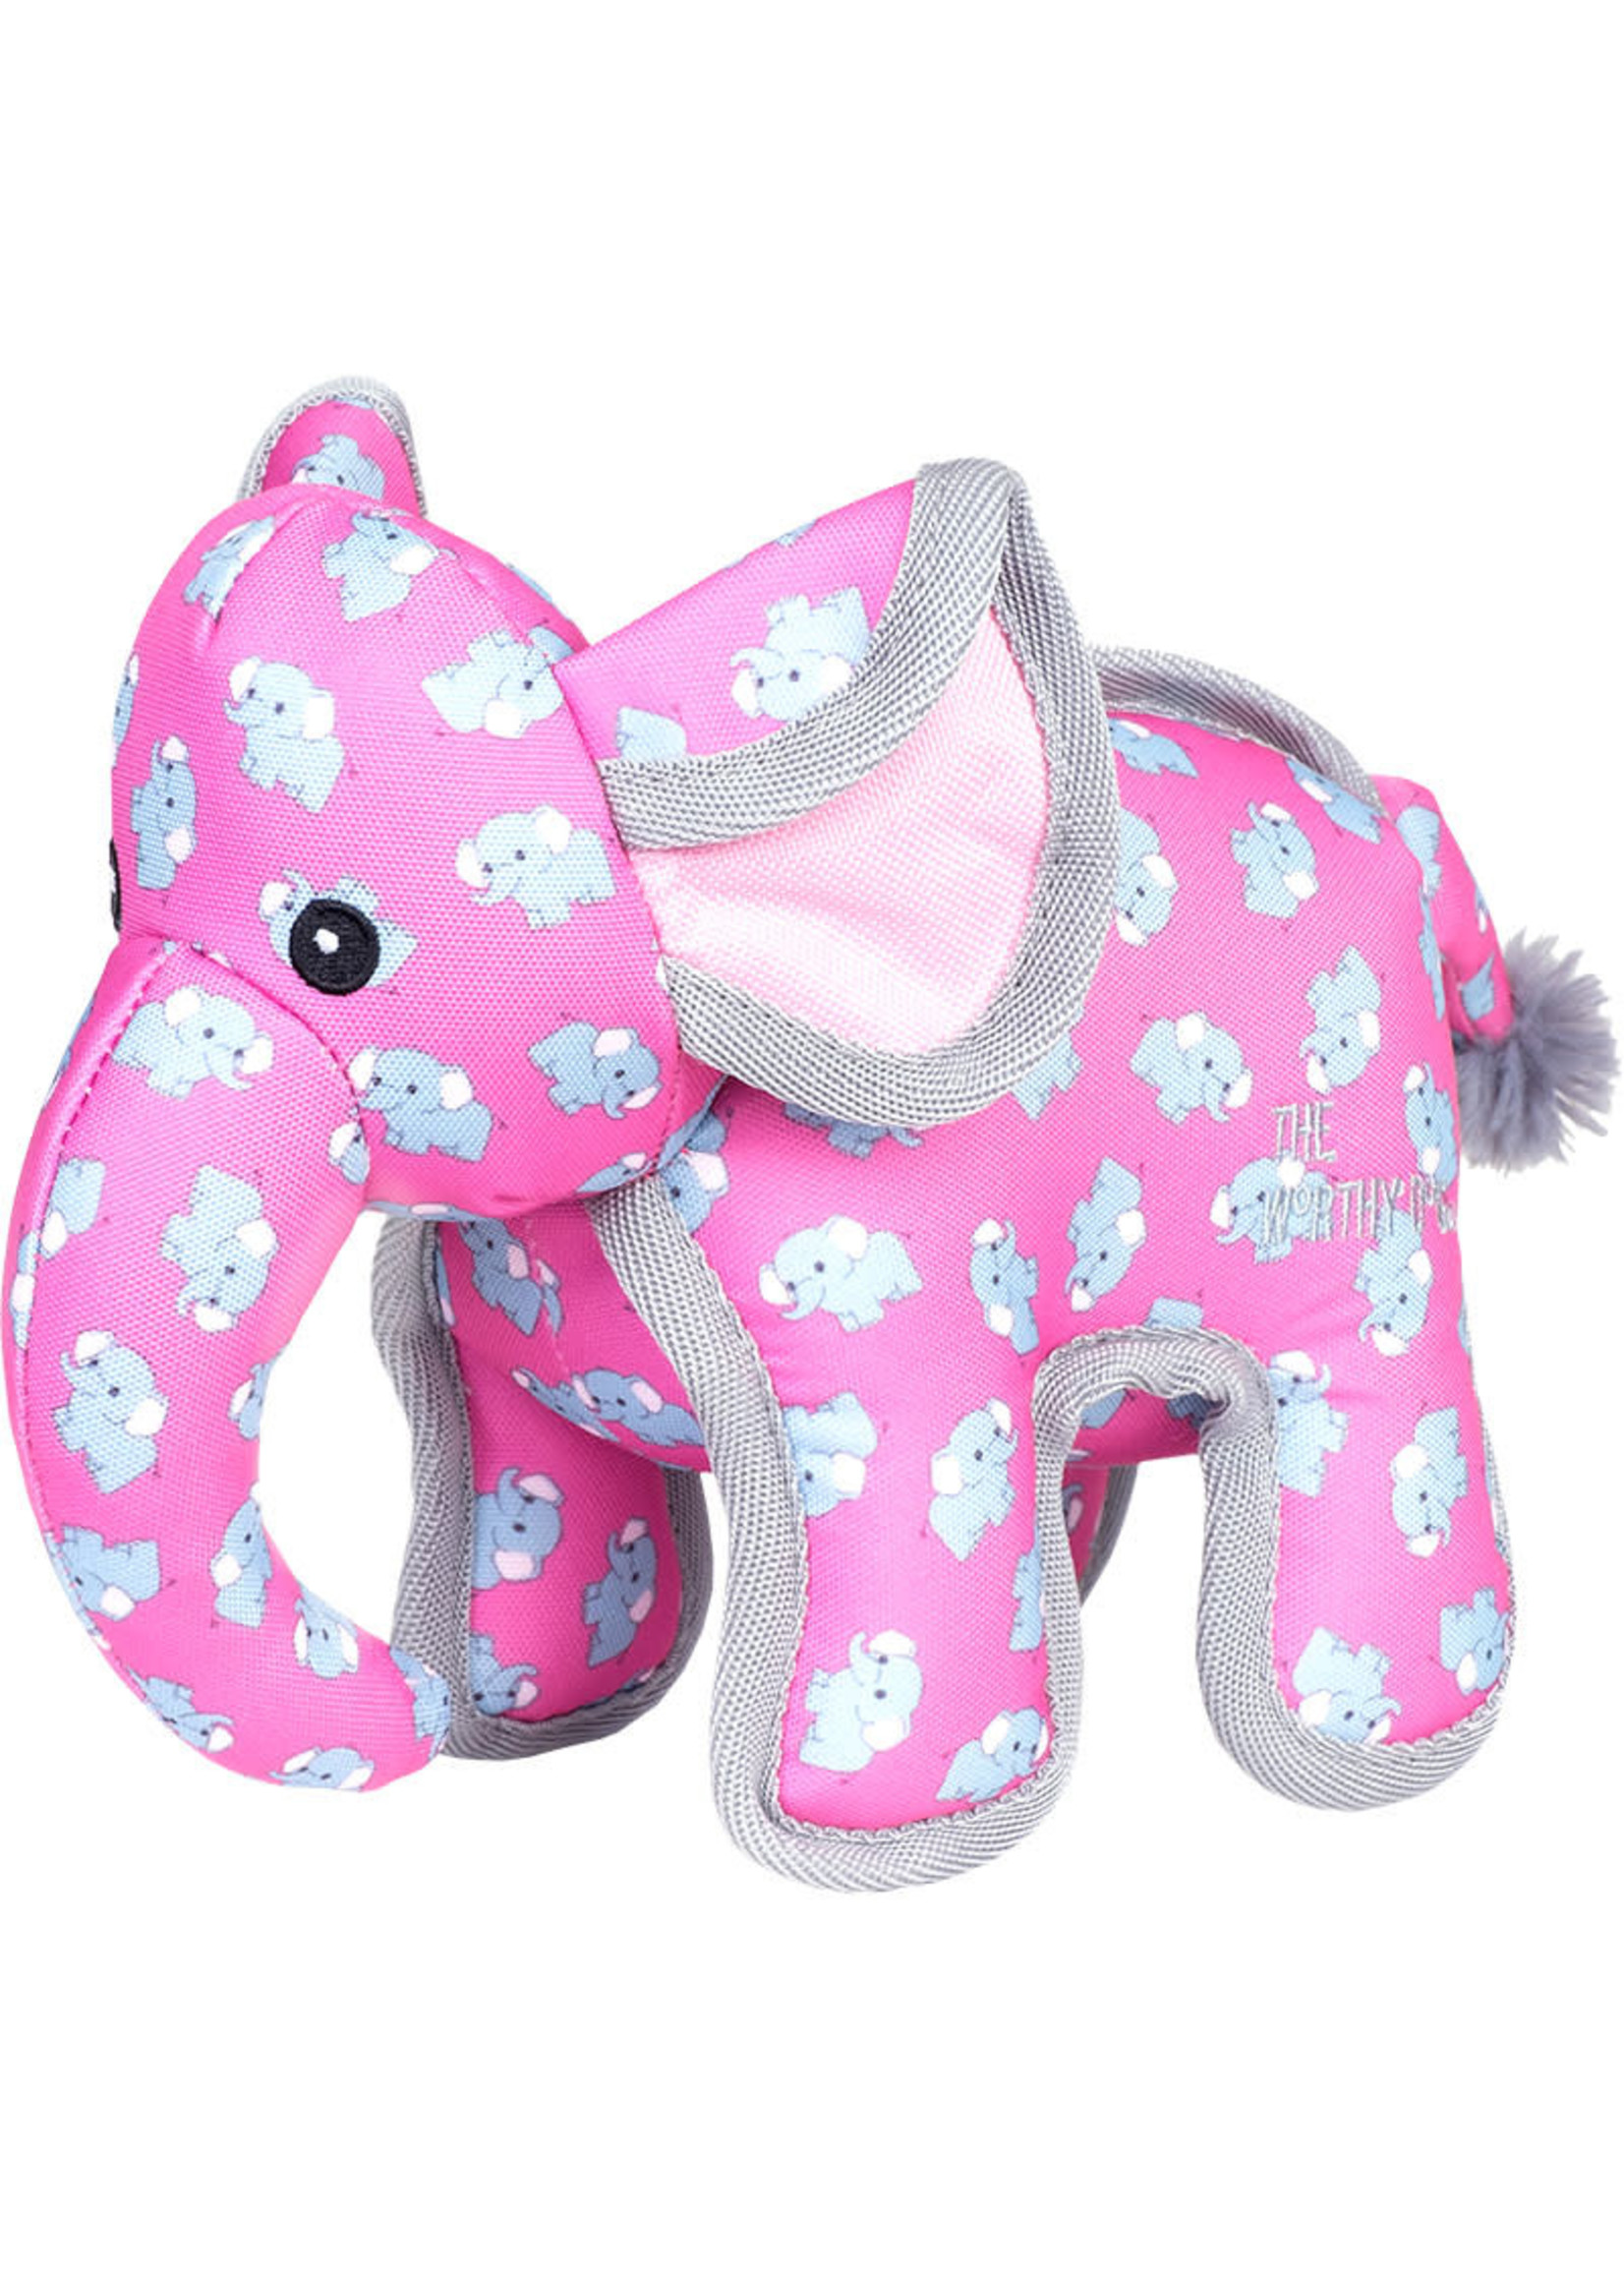 Worthy Dog Worthy Dog Pink Elephant Soft Toy SM